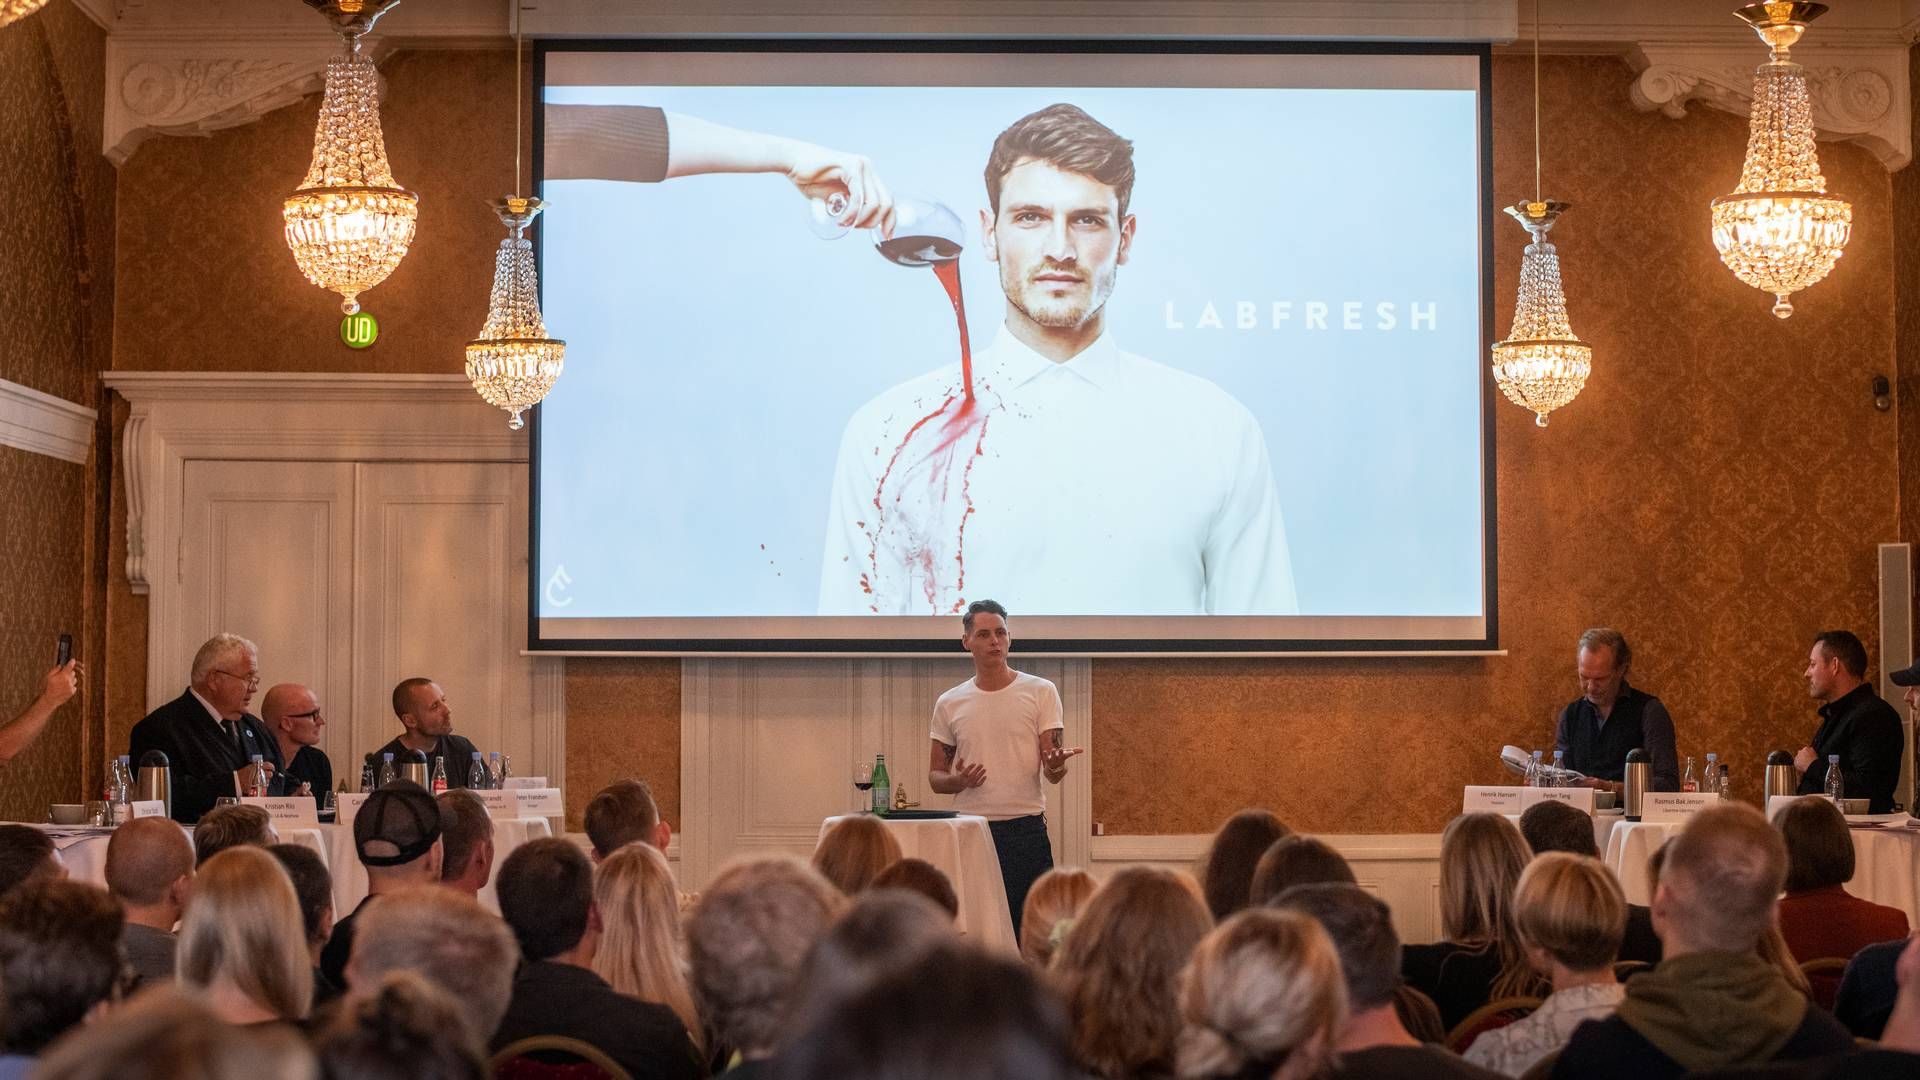 Kasper Brandi Petersen pitcher Labfresh' koncept til investorer i Aarhus i 2019. | Foto: Joachim Ladefoged